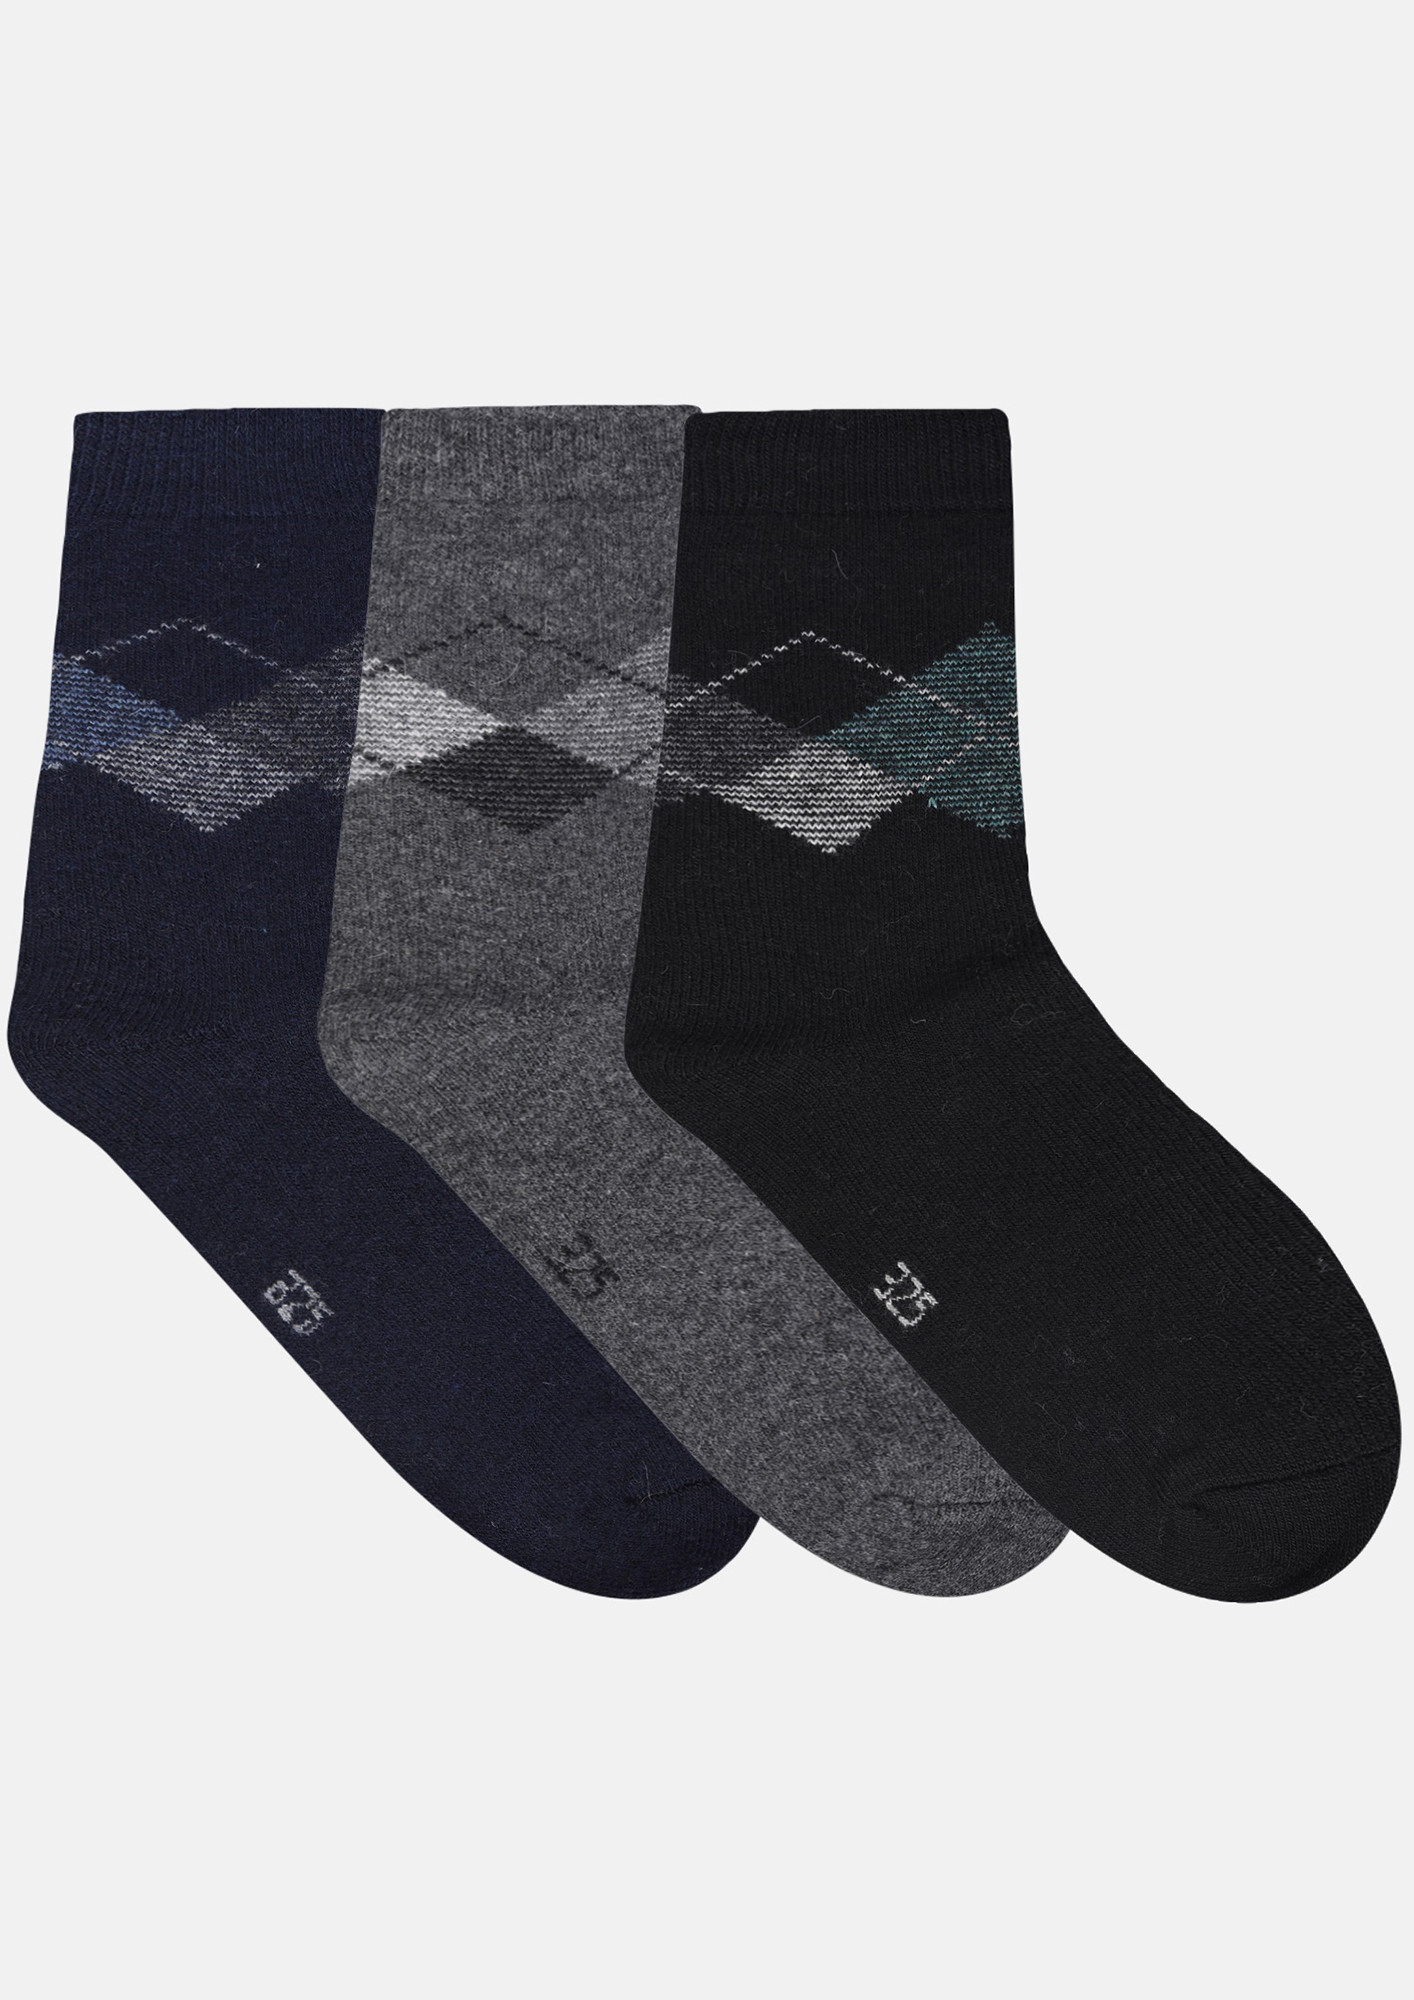 NEXT2SKIN Men's Woollen Regular length Socks (Pack of 3) (Navy Blue,Dark Grey,Black)